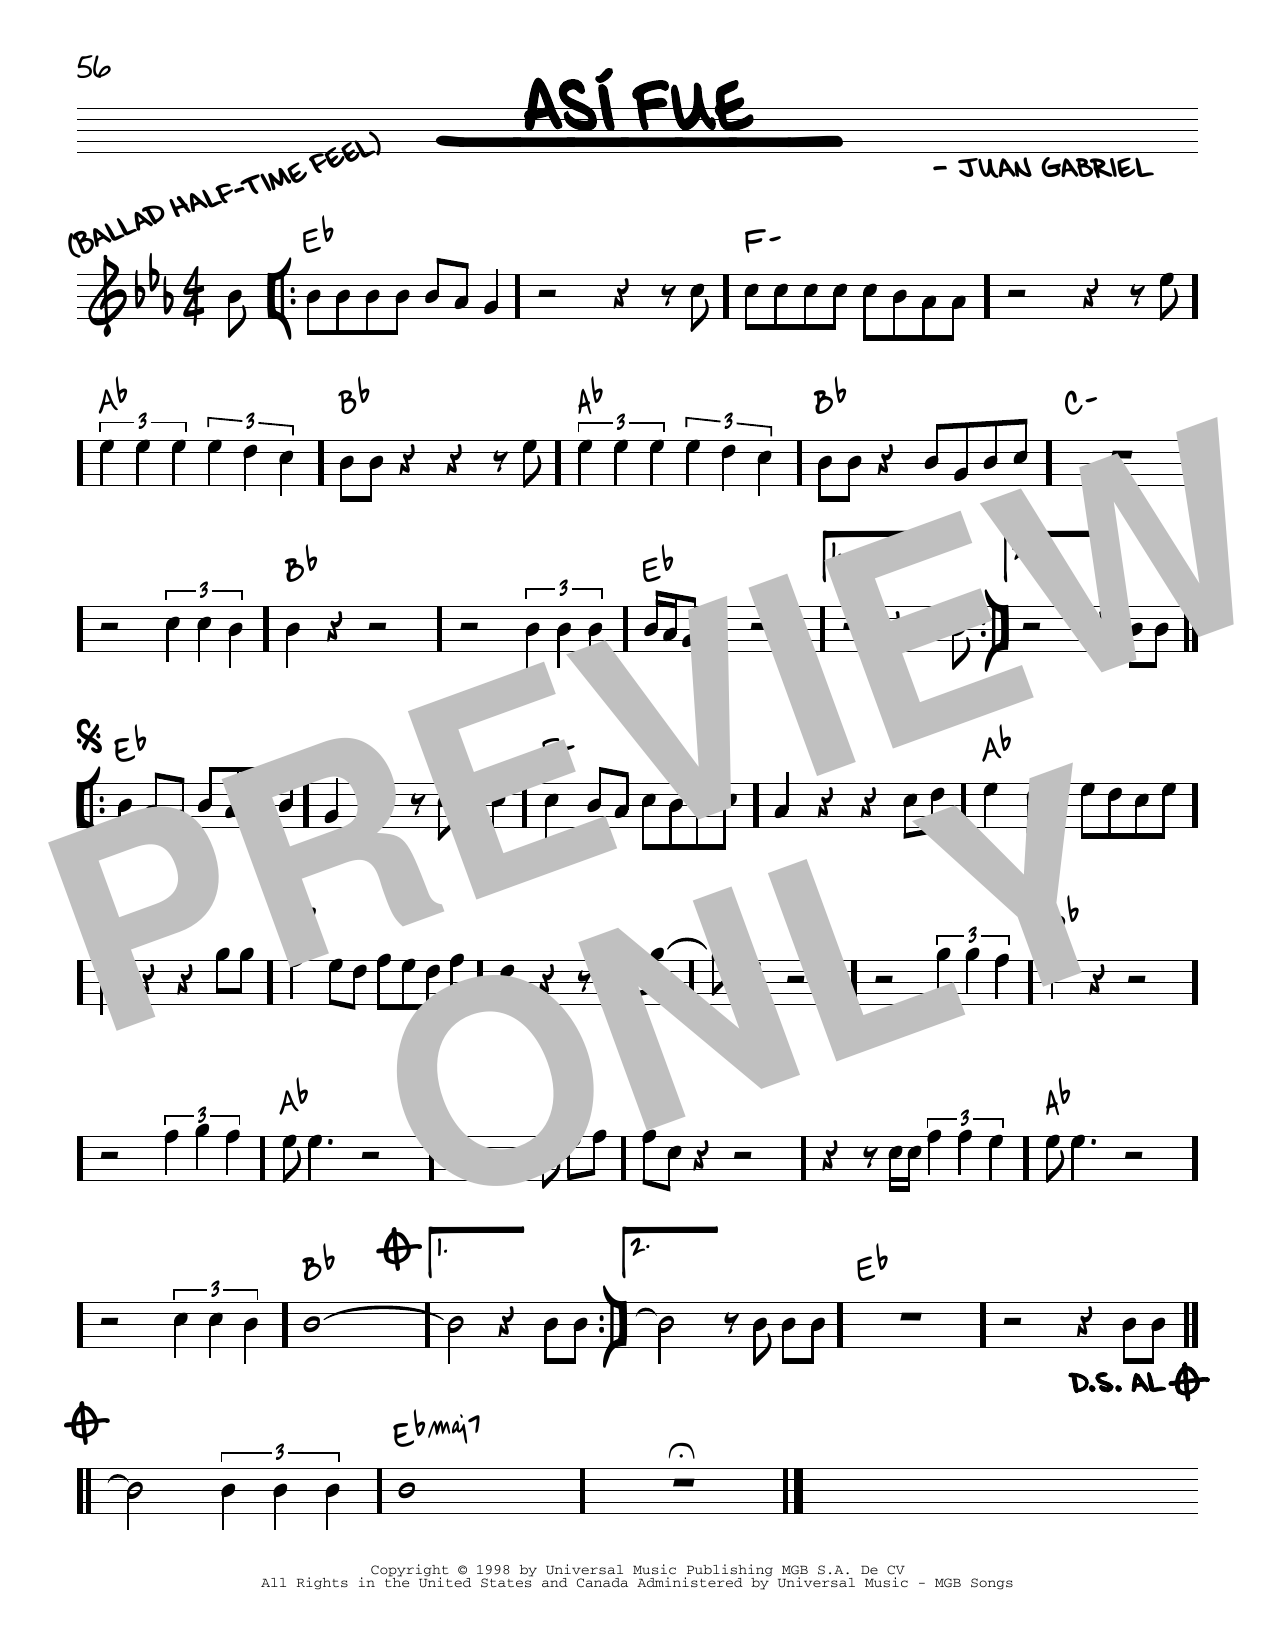 Juan Gabriel Asi fue Sheet Music Notes & Chords for Real Book – Melody & Chords - Download or Print PDF